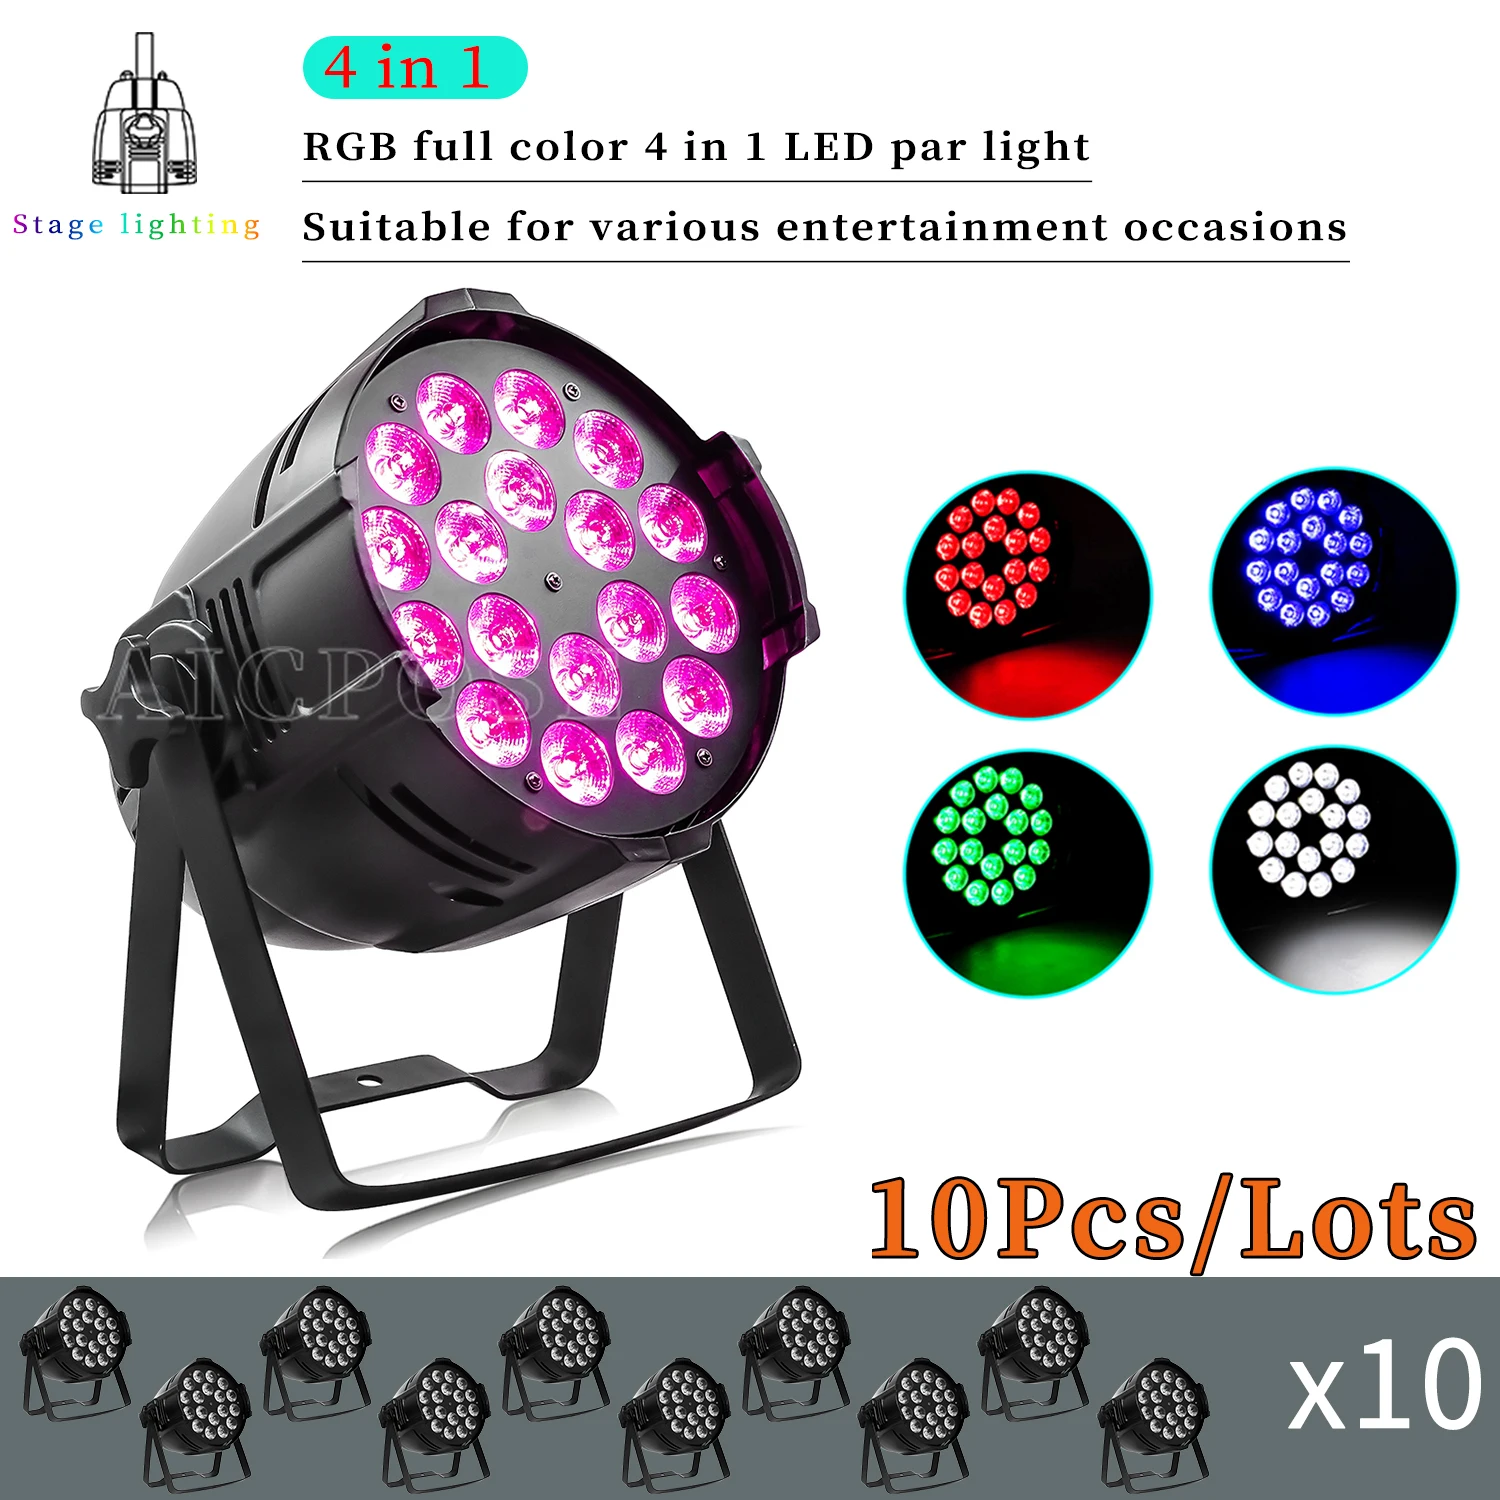 

10Pcs/Lots Aluminum Stage Light 18x12W RGBW 4in1 LED Par Light DMX Control Professional DJ Disco Equipment Lighting